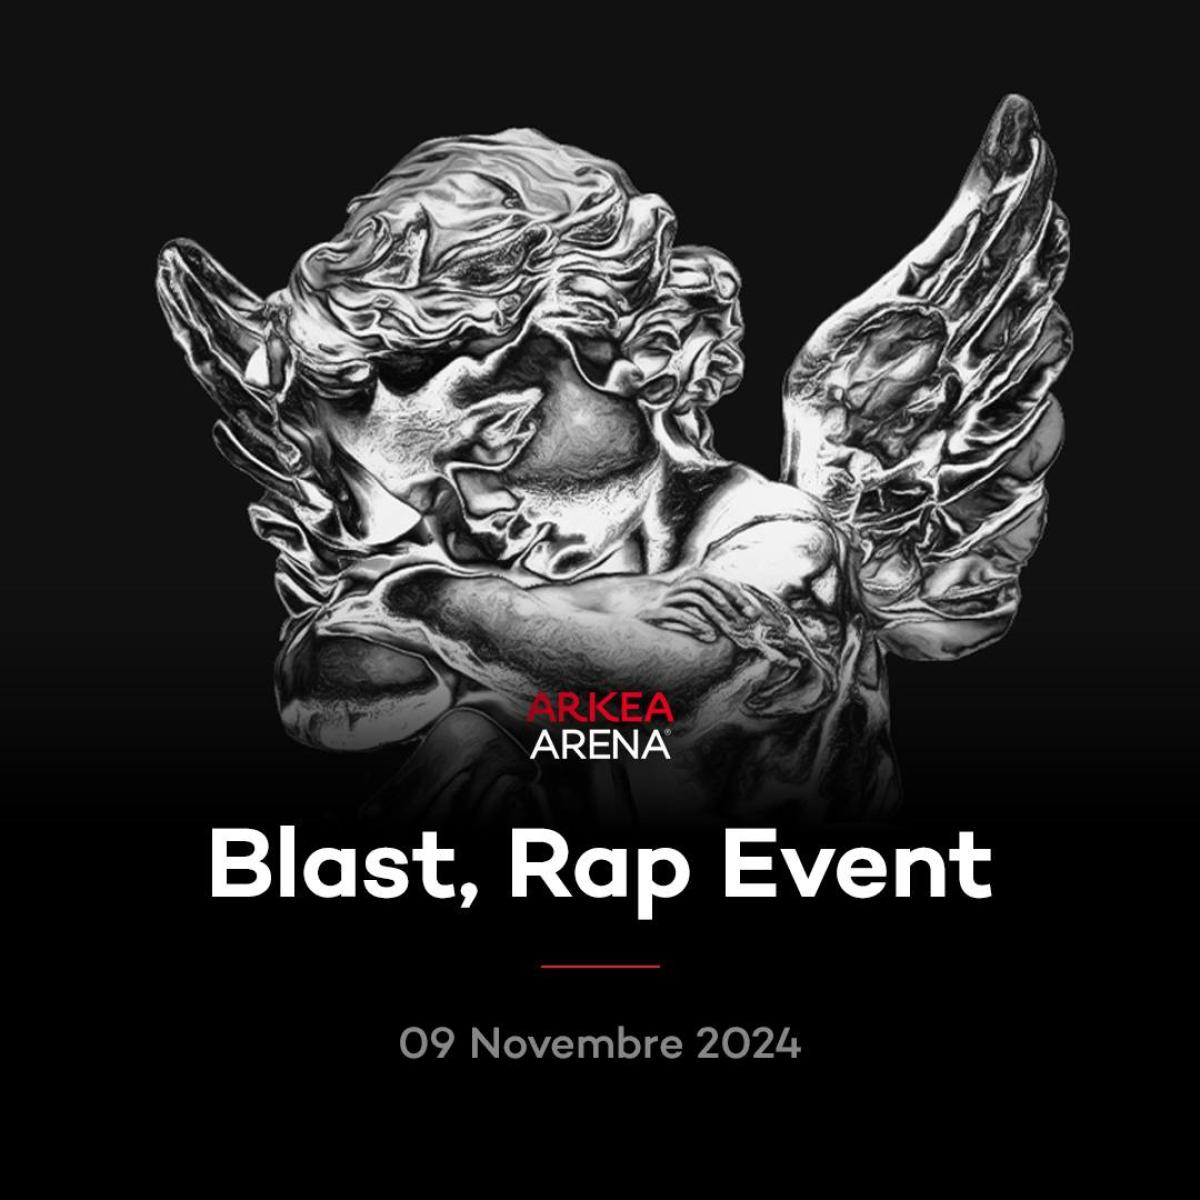 Blast - Rap Event at Arkea Arena Tickets